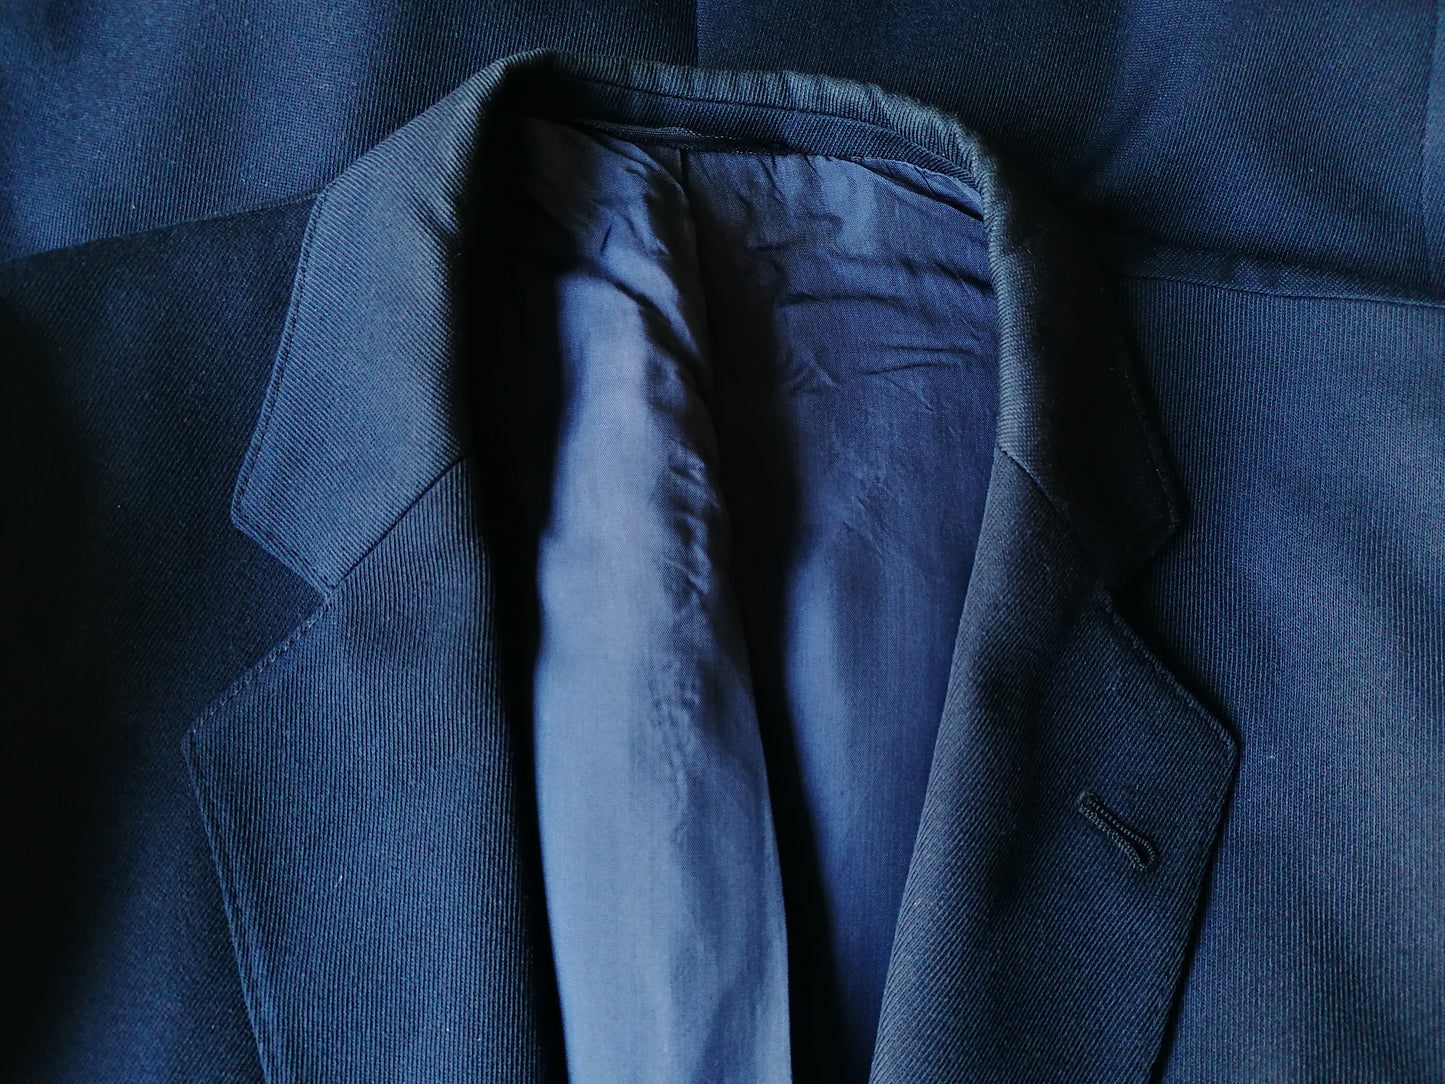 Vintage wool costume. Dark blue colored. Size 56 / XL.